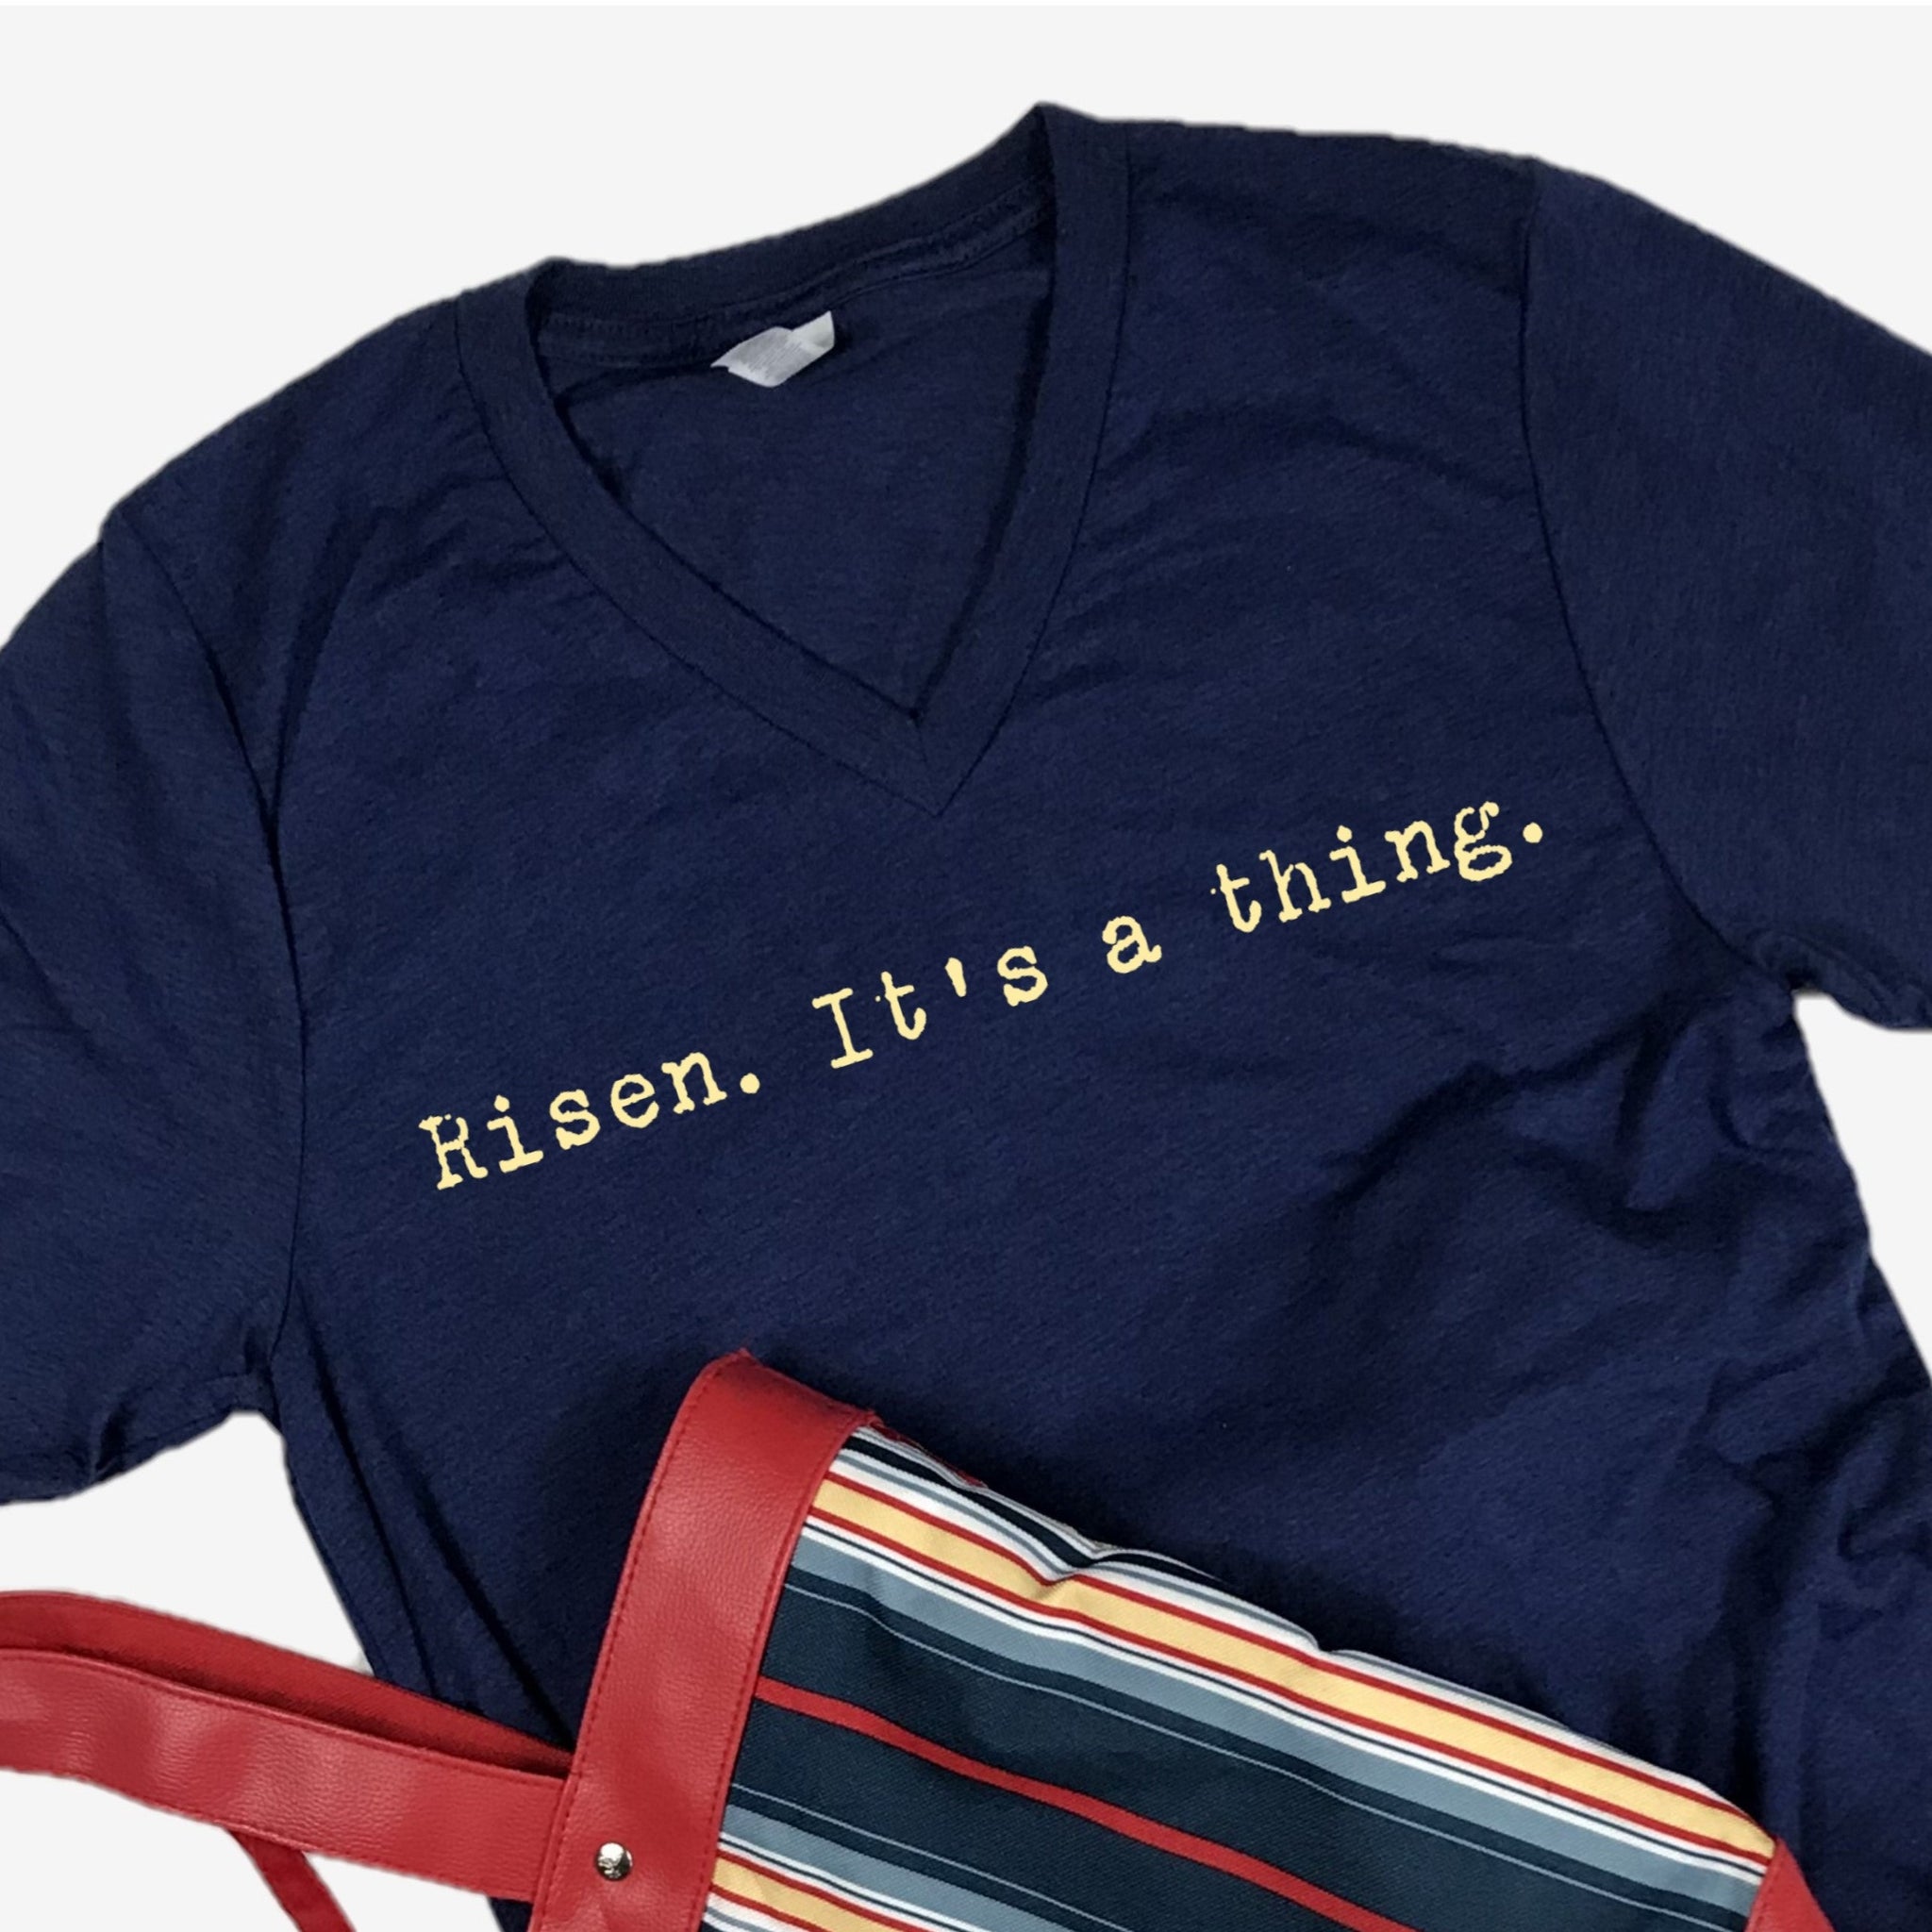 "Risen. It's a thing." Short Sleeve Tee Shirt, V-Neck, Navy Tri-blend